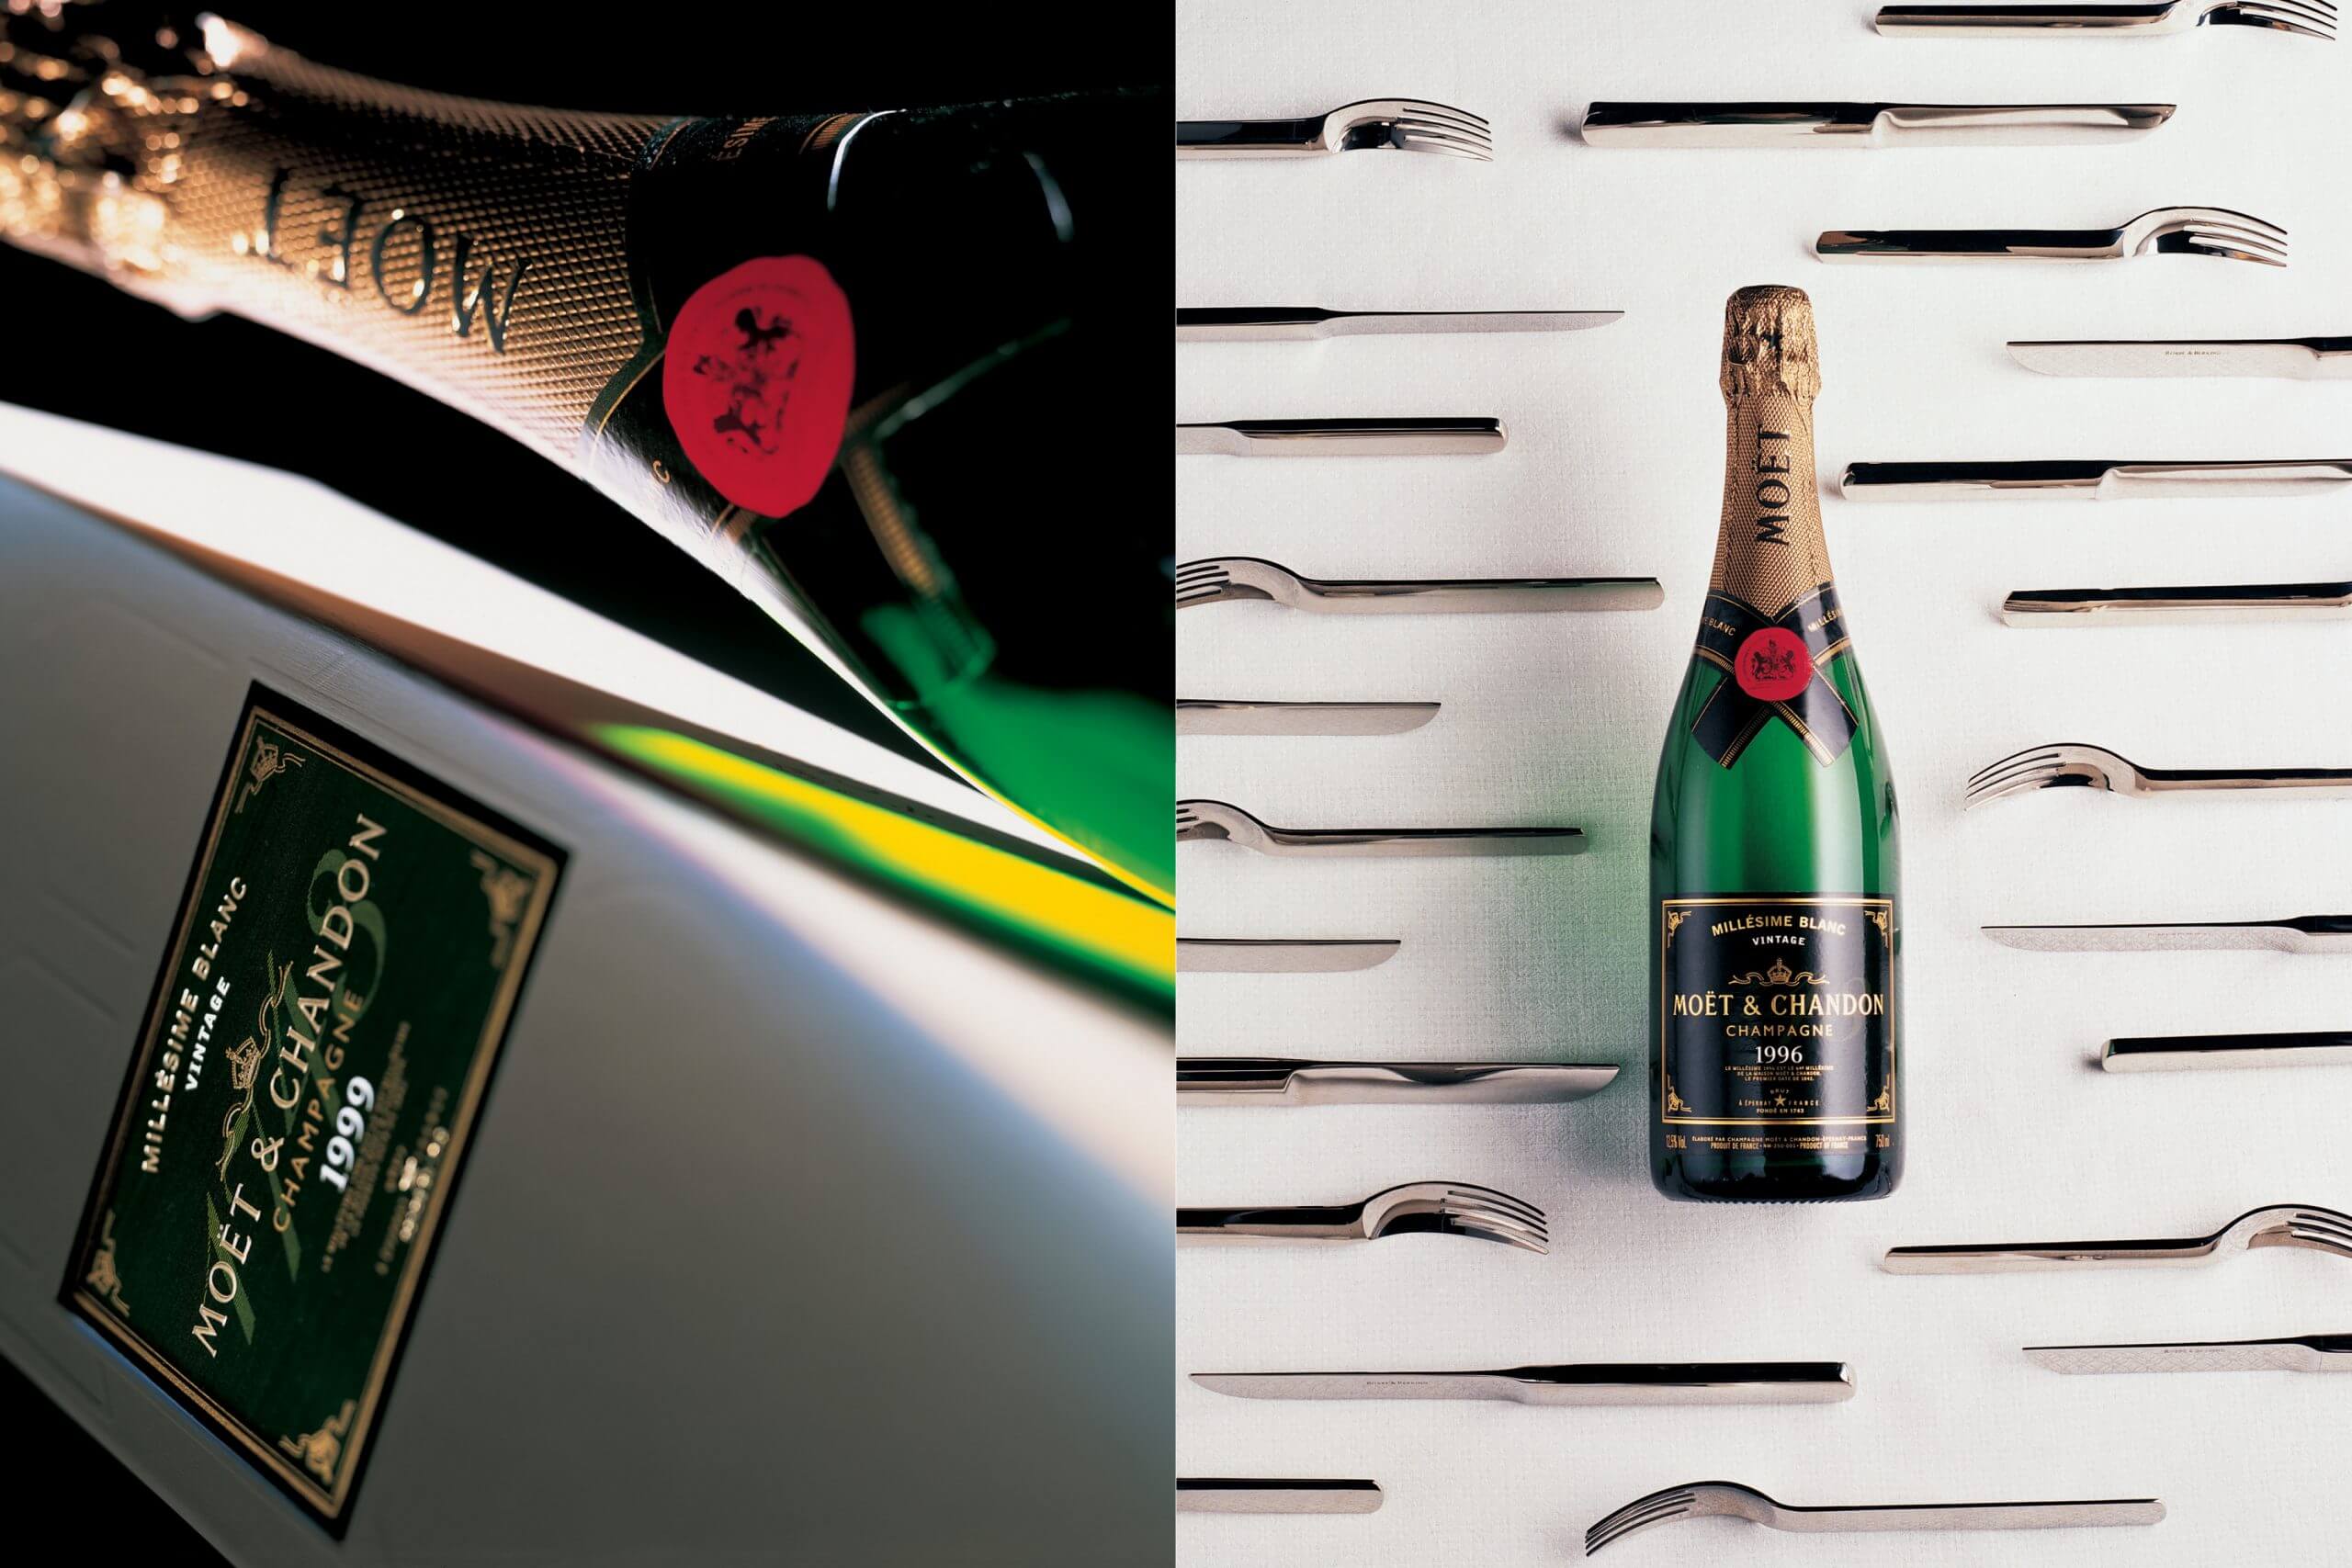 Claymont,DE  Louis Vuitton Moet Hennessy Luxury Champagne